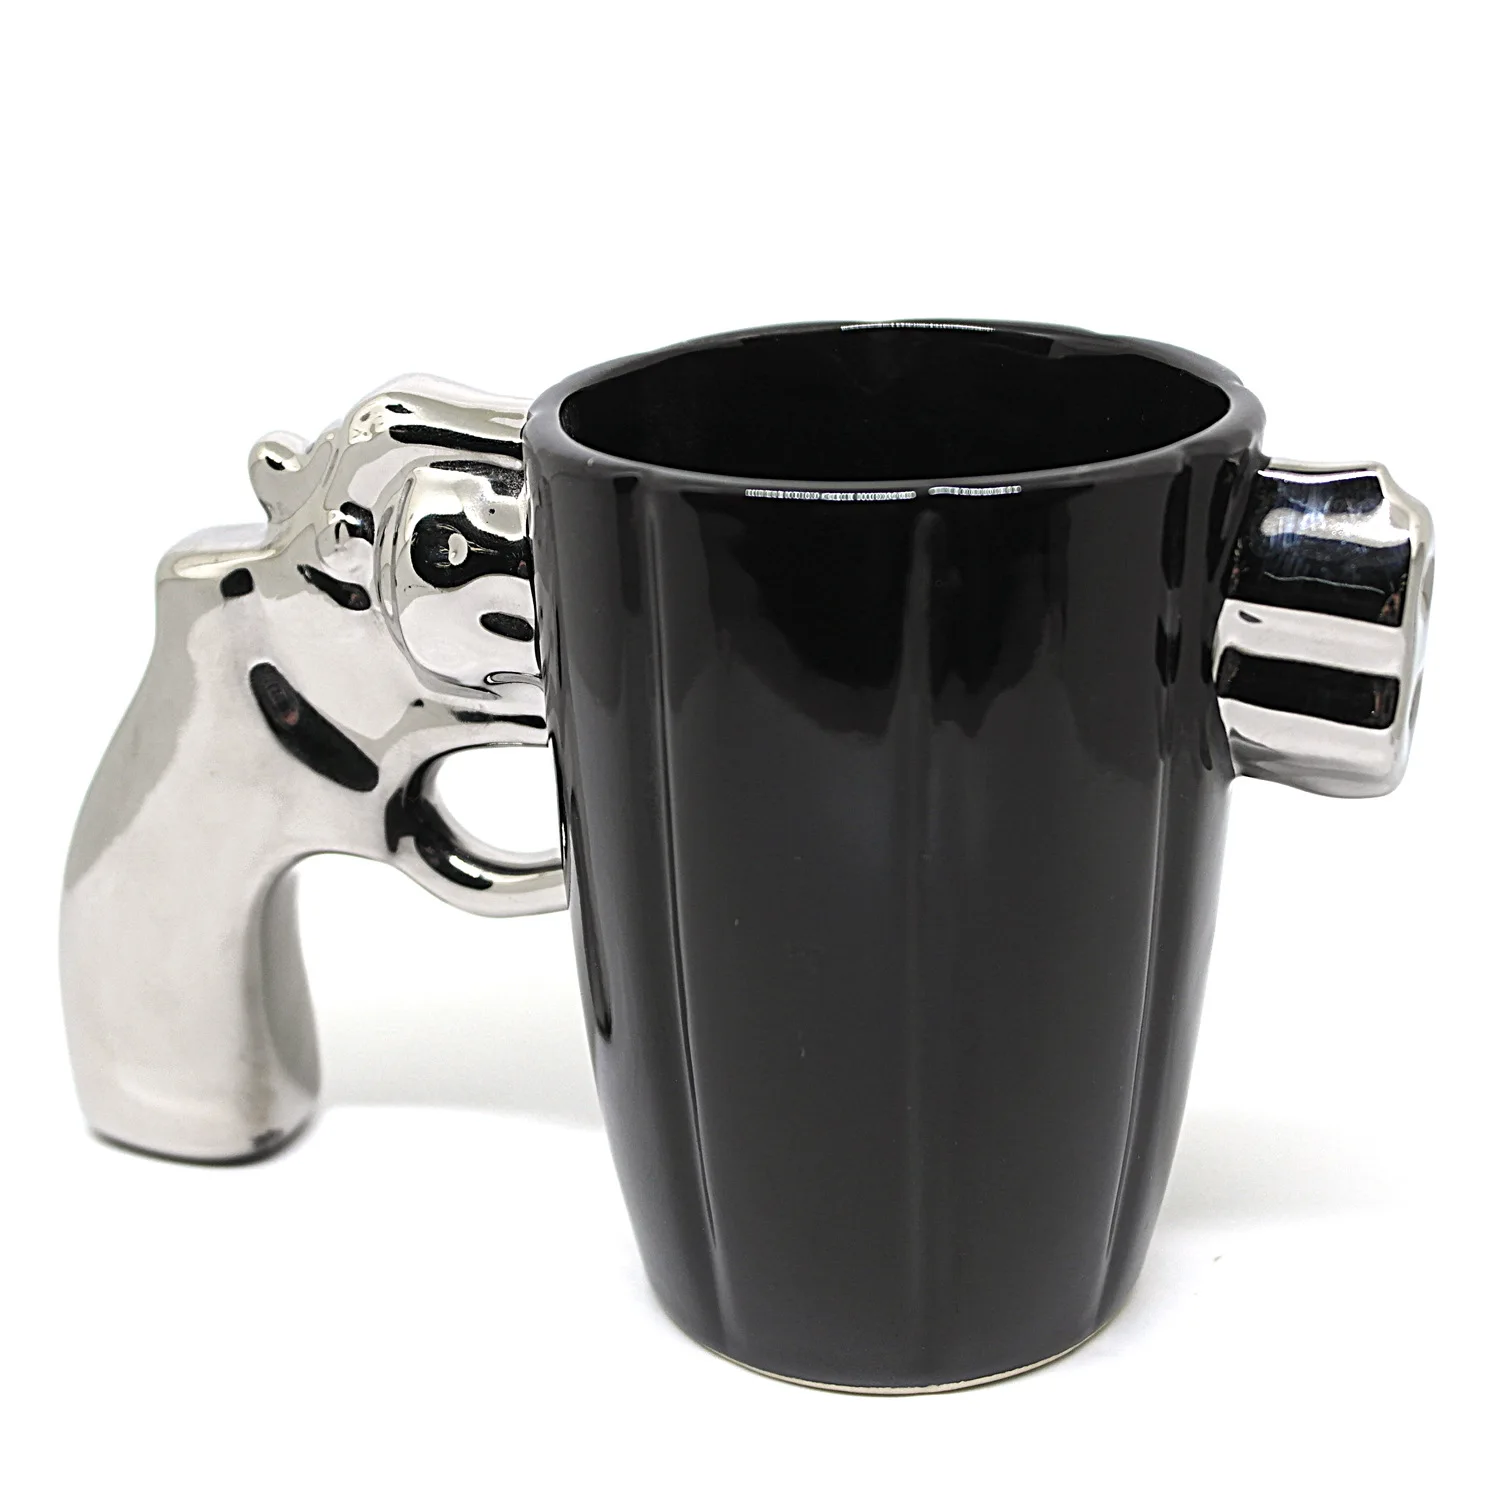 Revolver Mug Ceramic Coffee Mugs Gun Mugs Pistol Cup For Amazing Gift Buy Gun Mug Pistol Cup